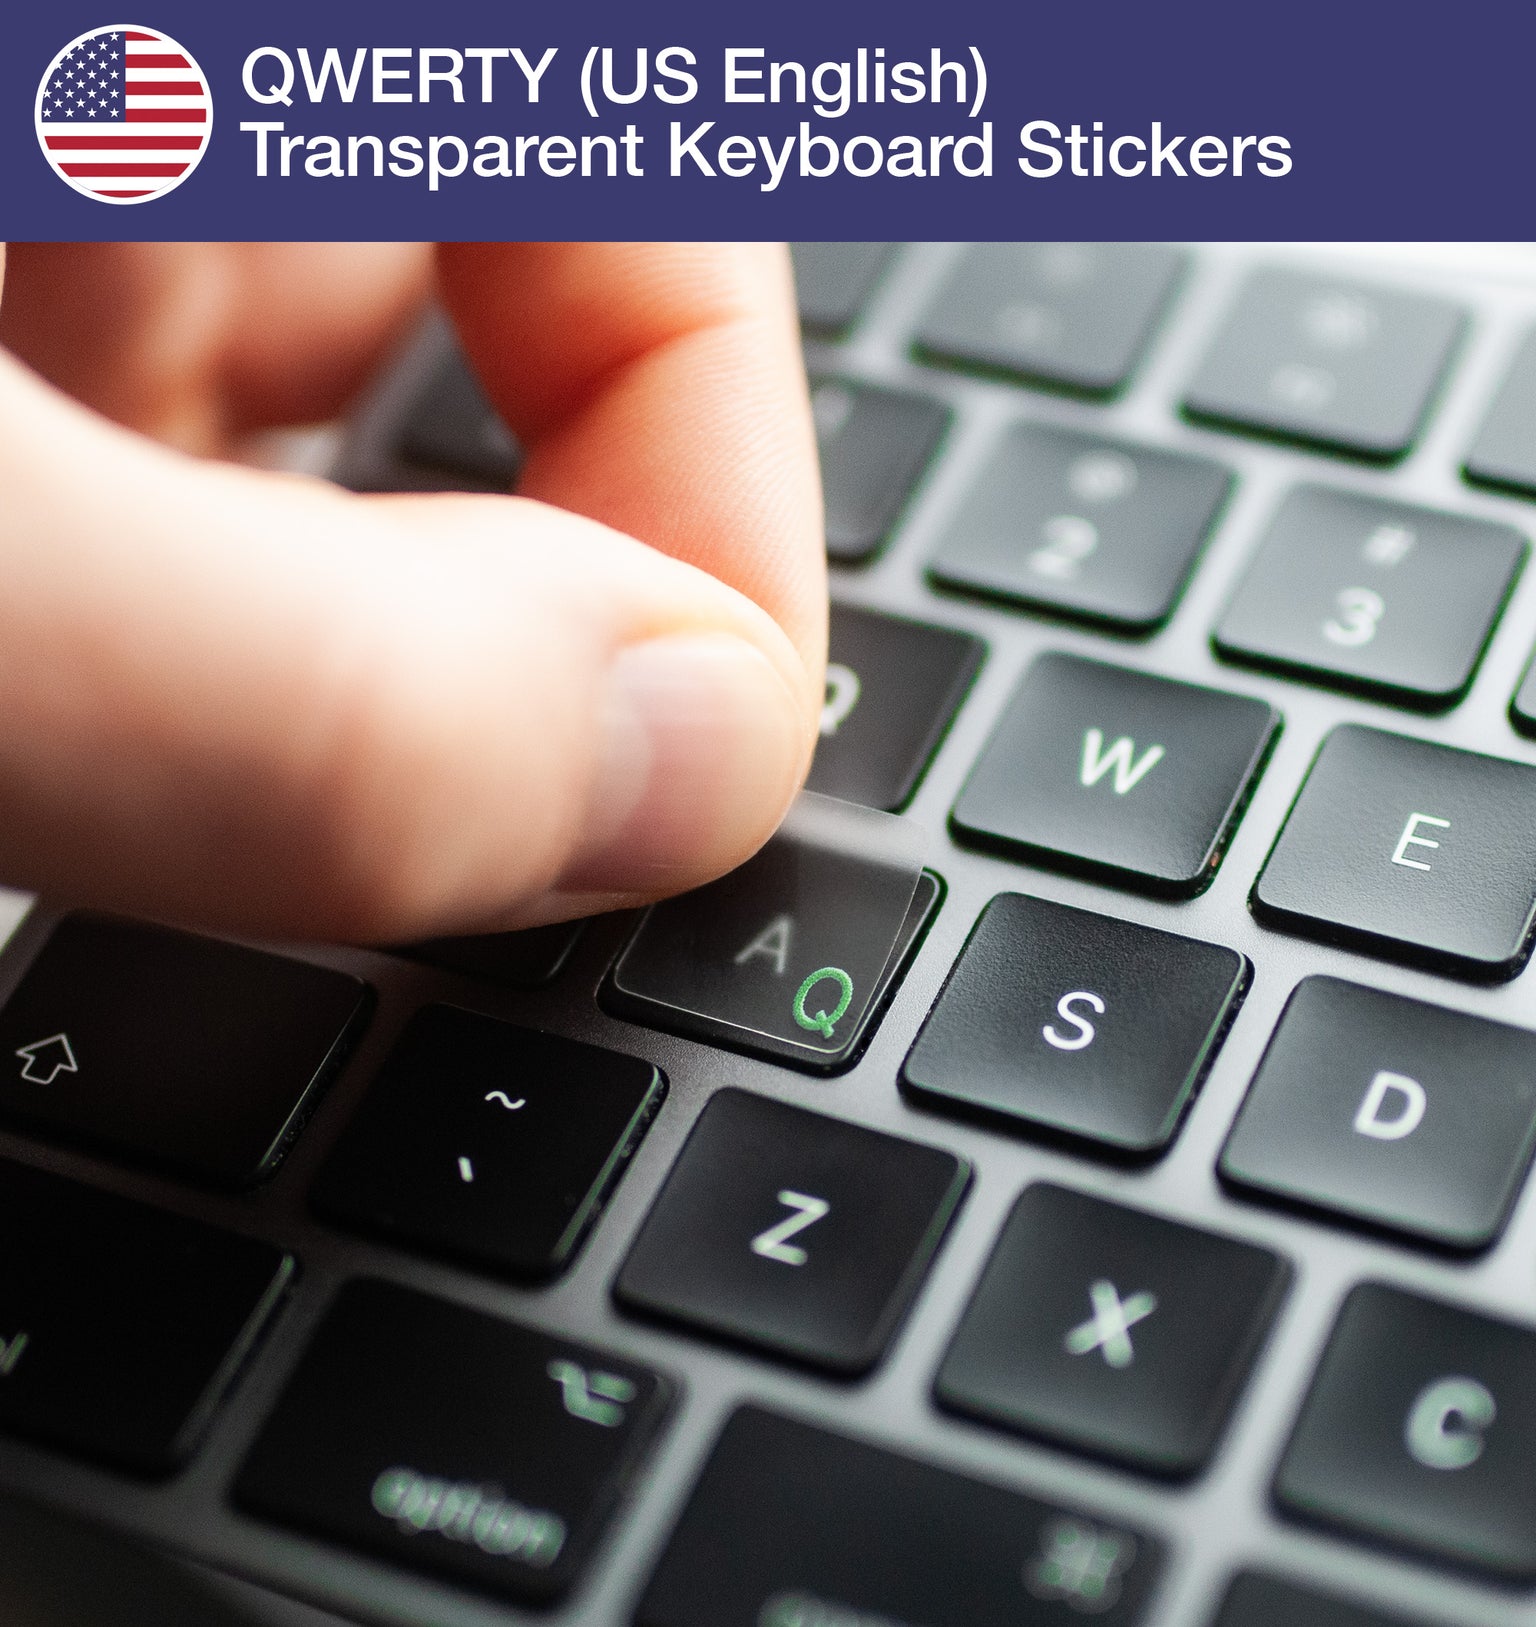 QWERTY (US English) Transparent Keyboard Stickers with US English keyboard layout